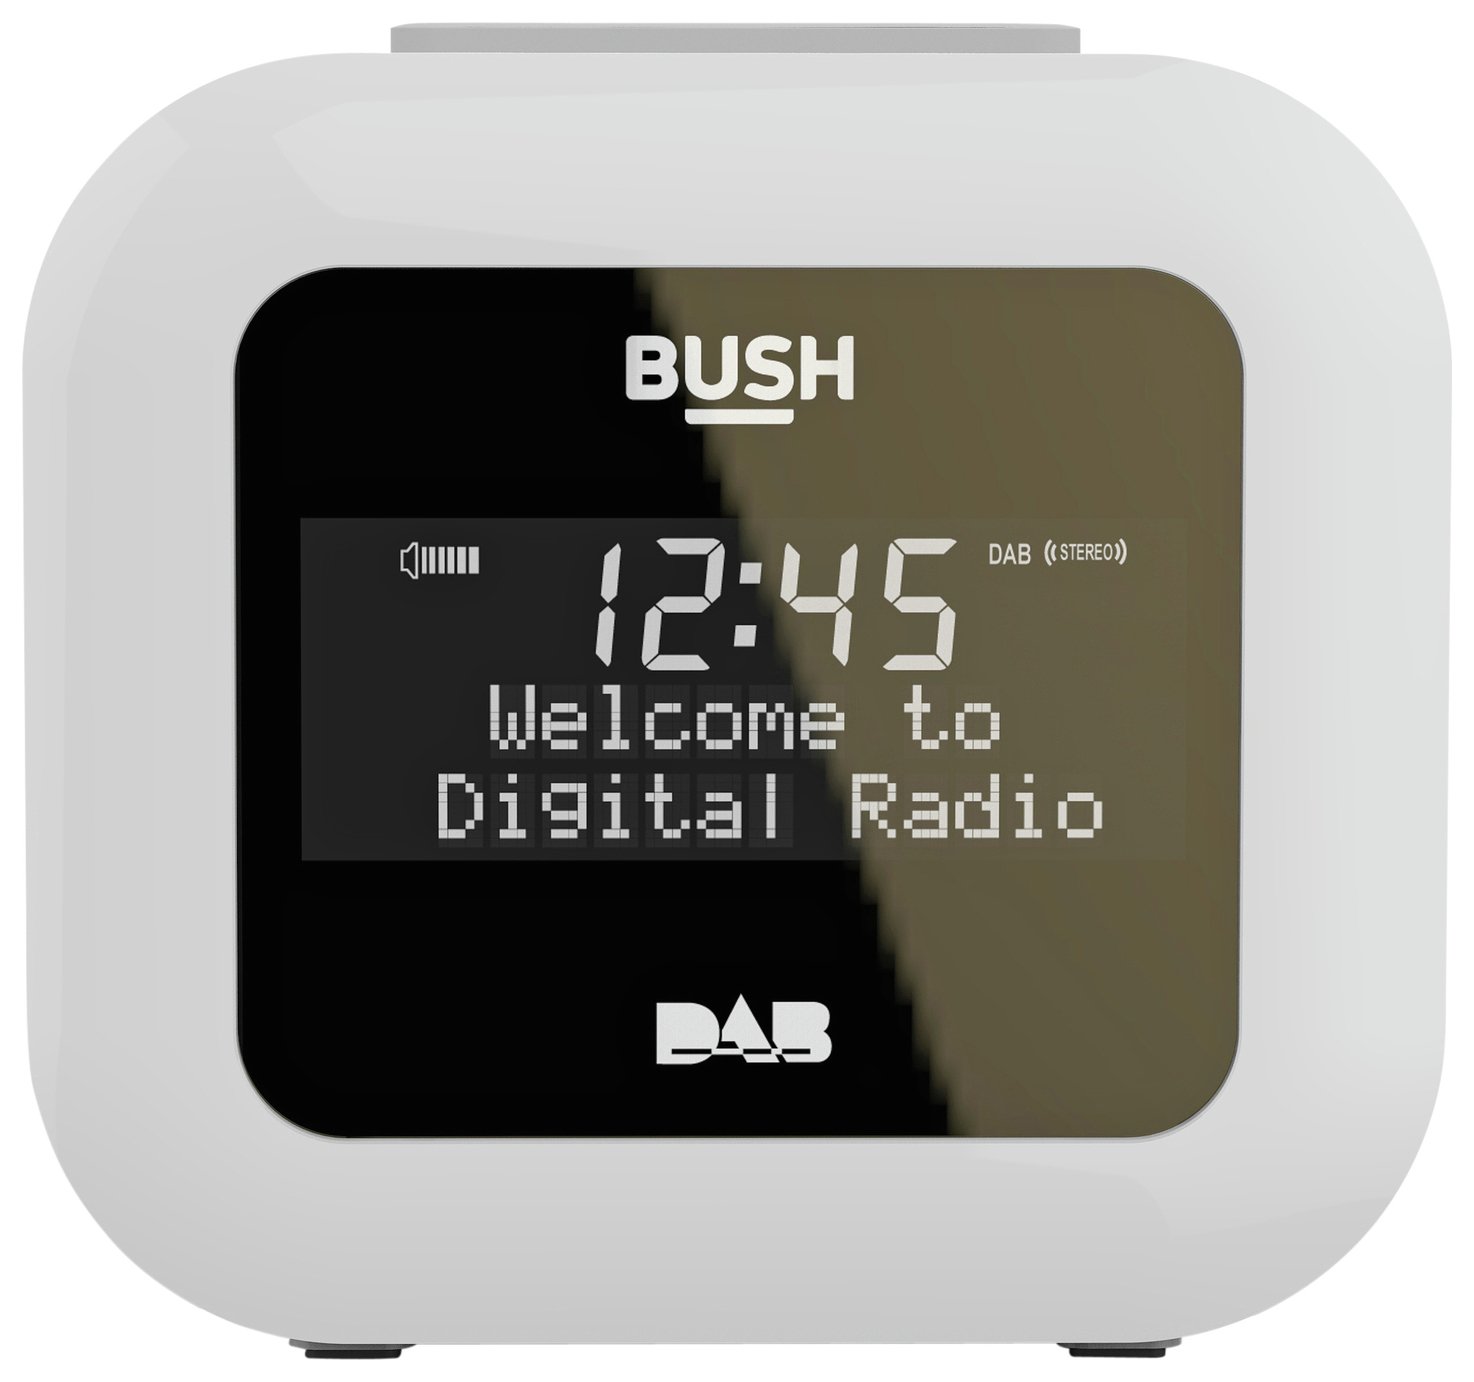 Bush USB DAB Clock Radio - White